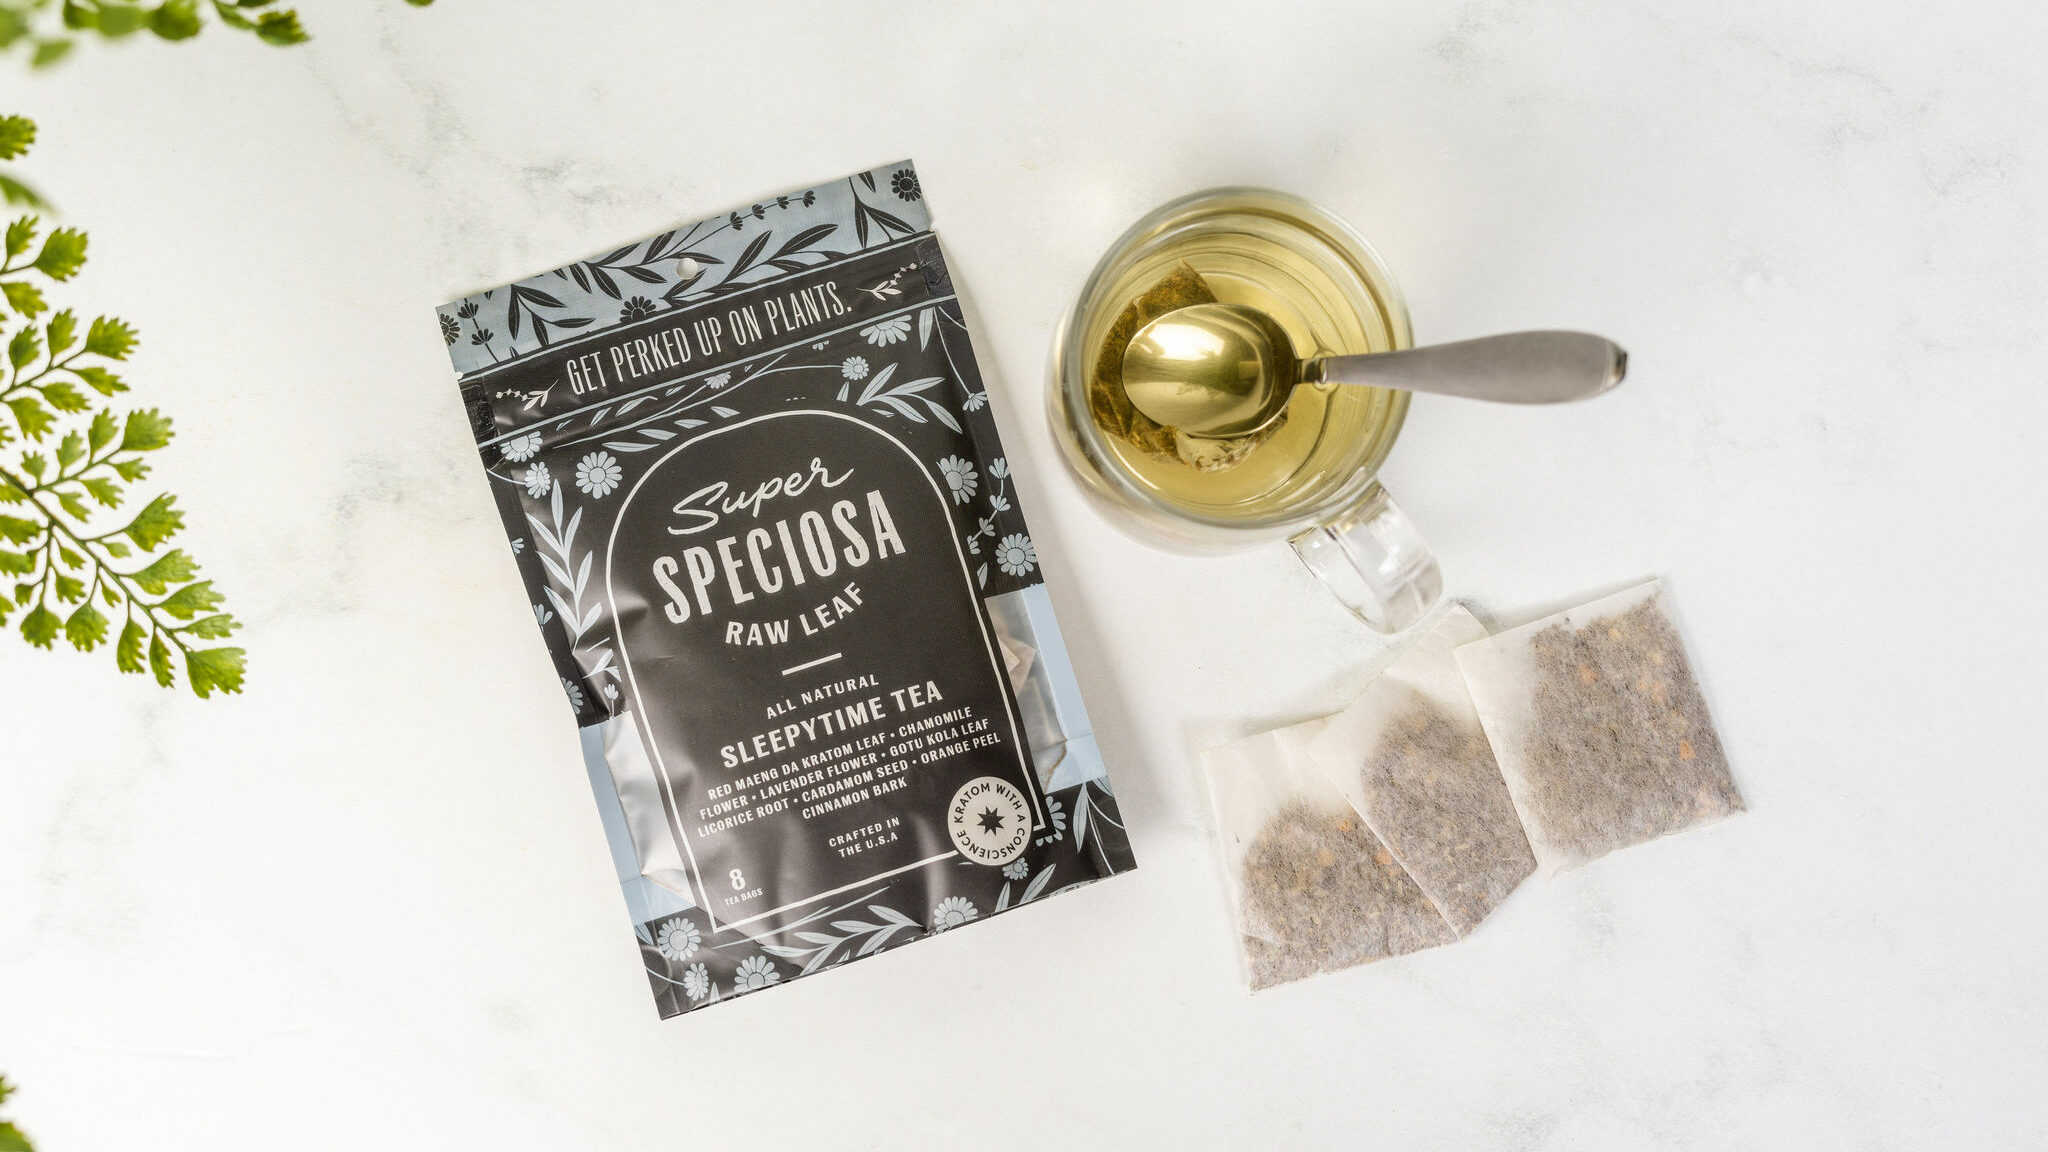 Super Speciosa sleepytime kratom tea bags. Choose this kratom tea if you need a restful sleep!